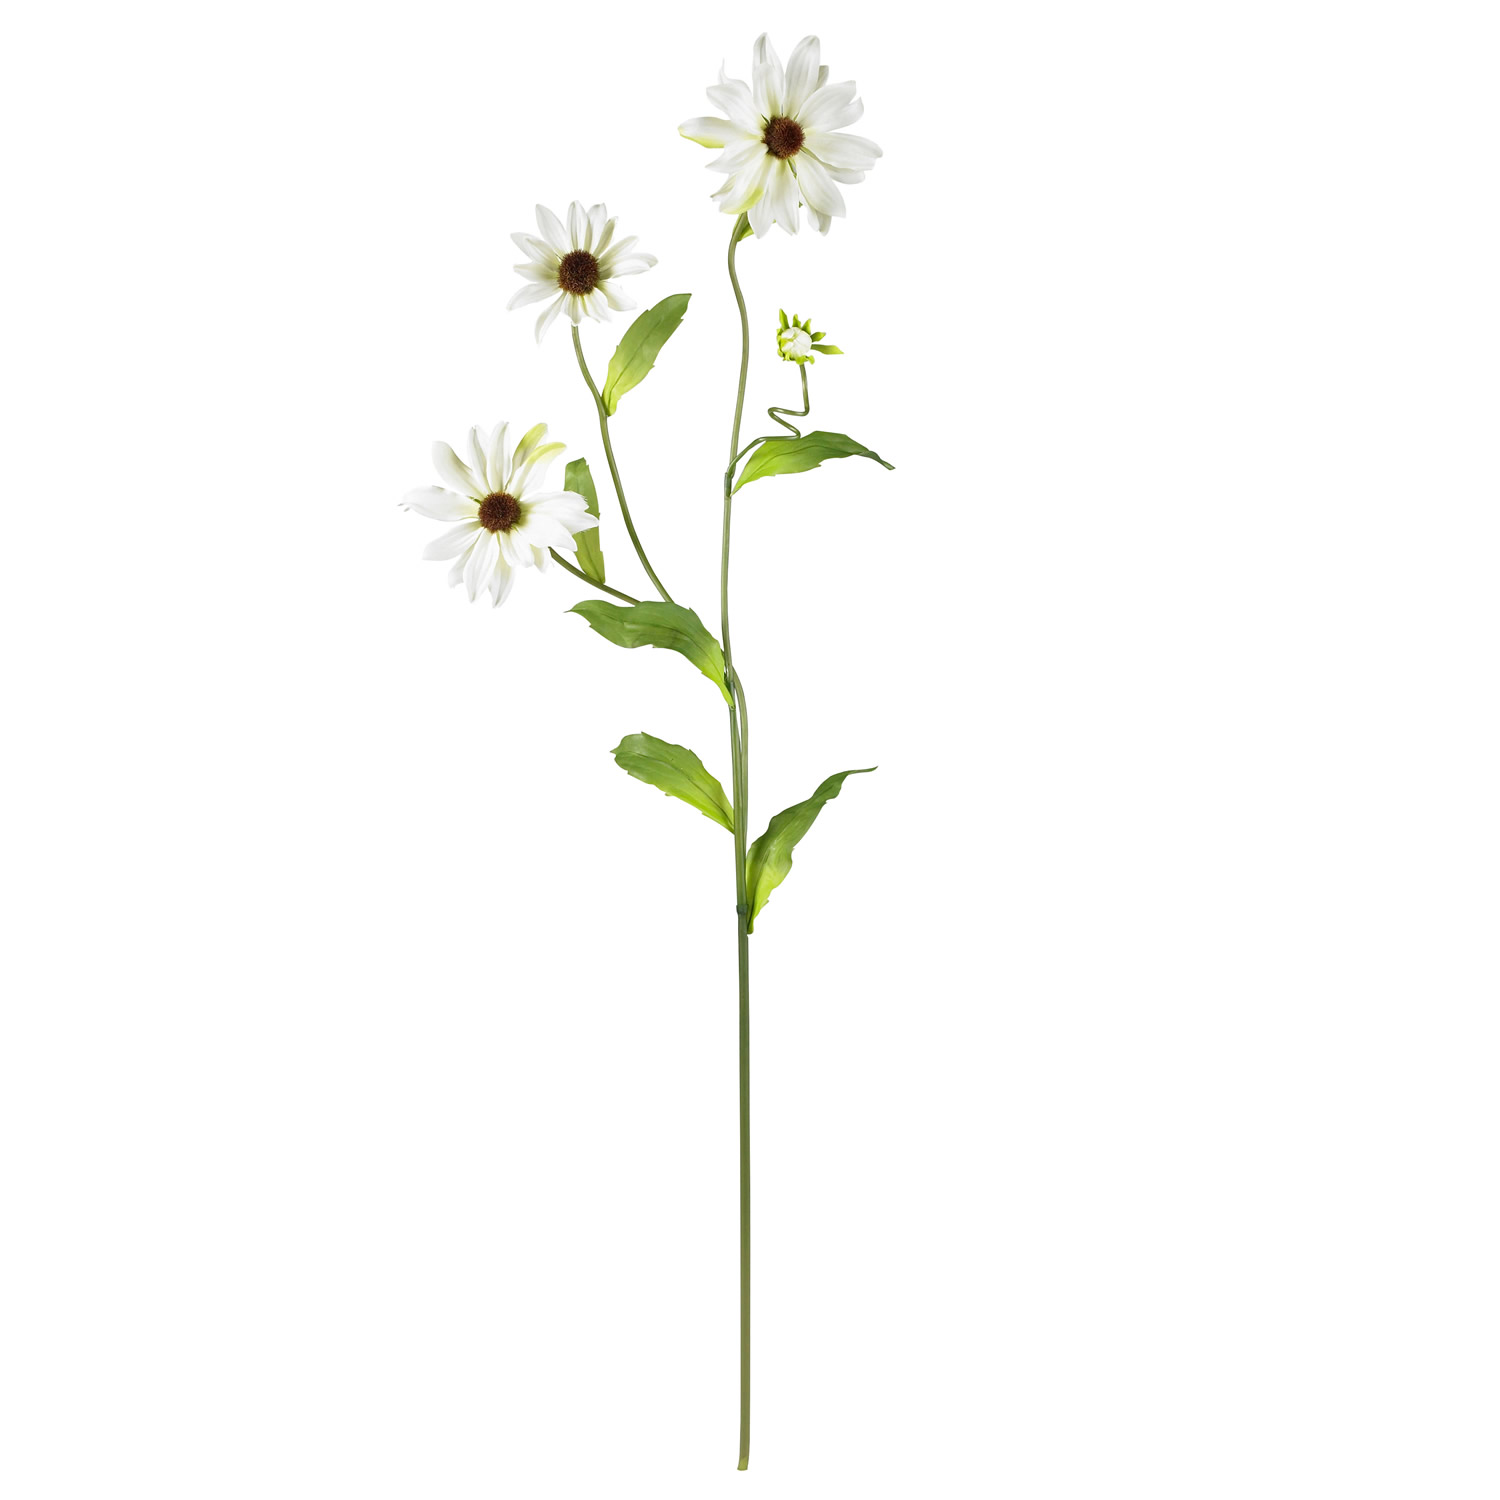 Free Flower Stem, Download Free Flower Stem png images, Free ClipArts